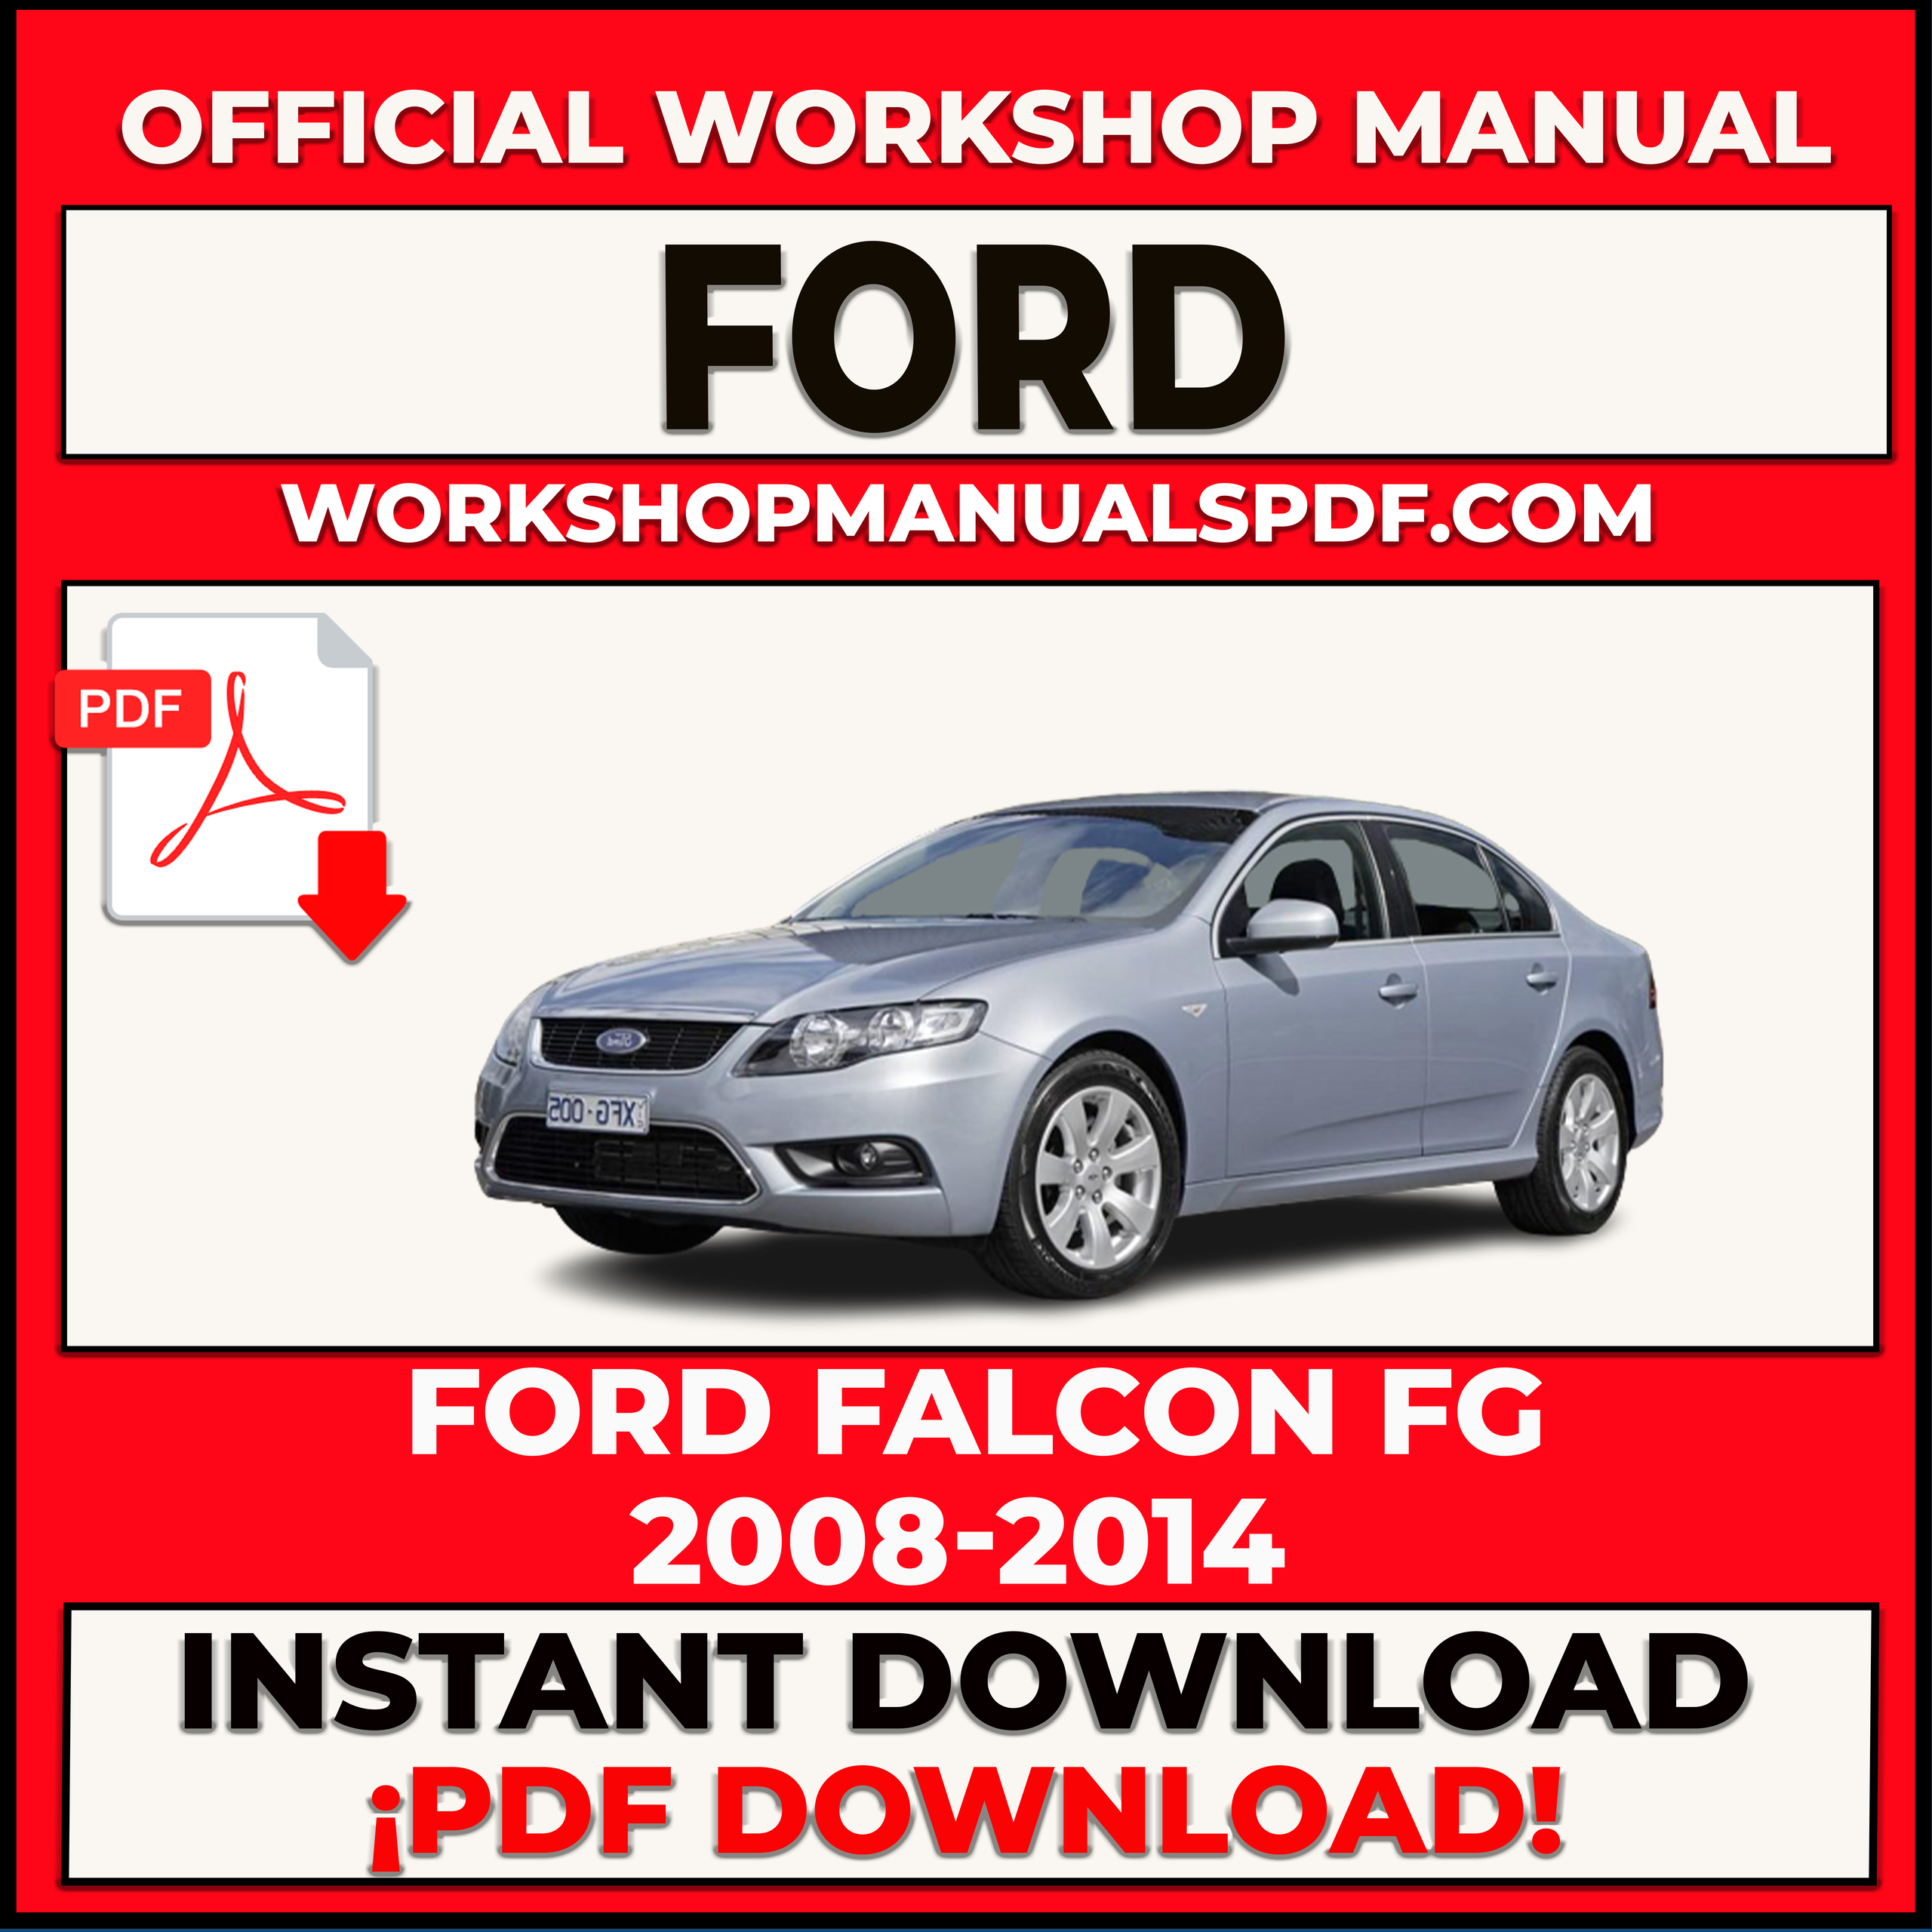 Ford Falcon FG 2008-2014 Workshop Repair Manual